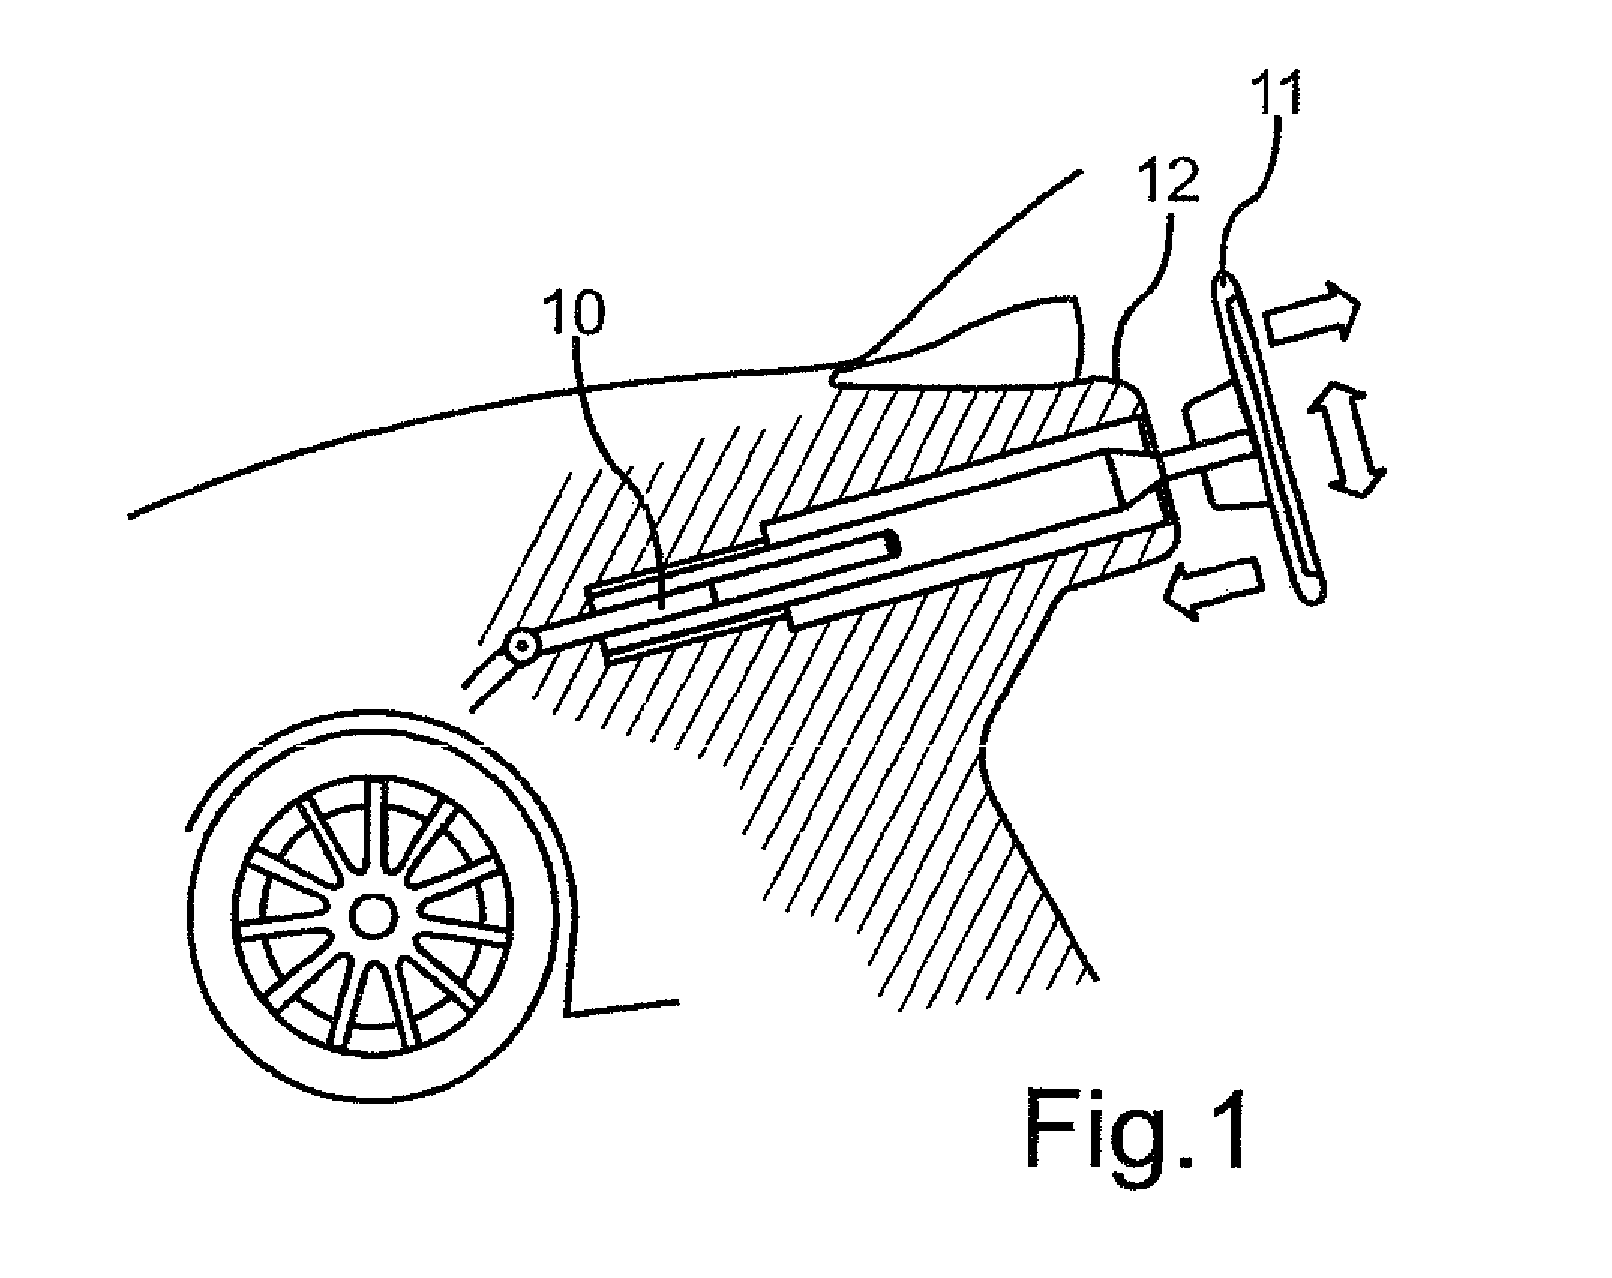 Motor vehicle with retractable steering wheel